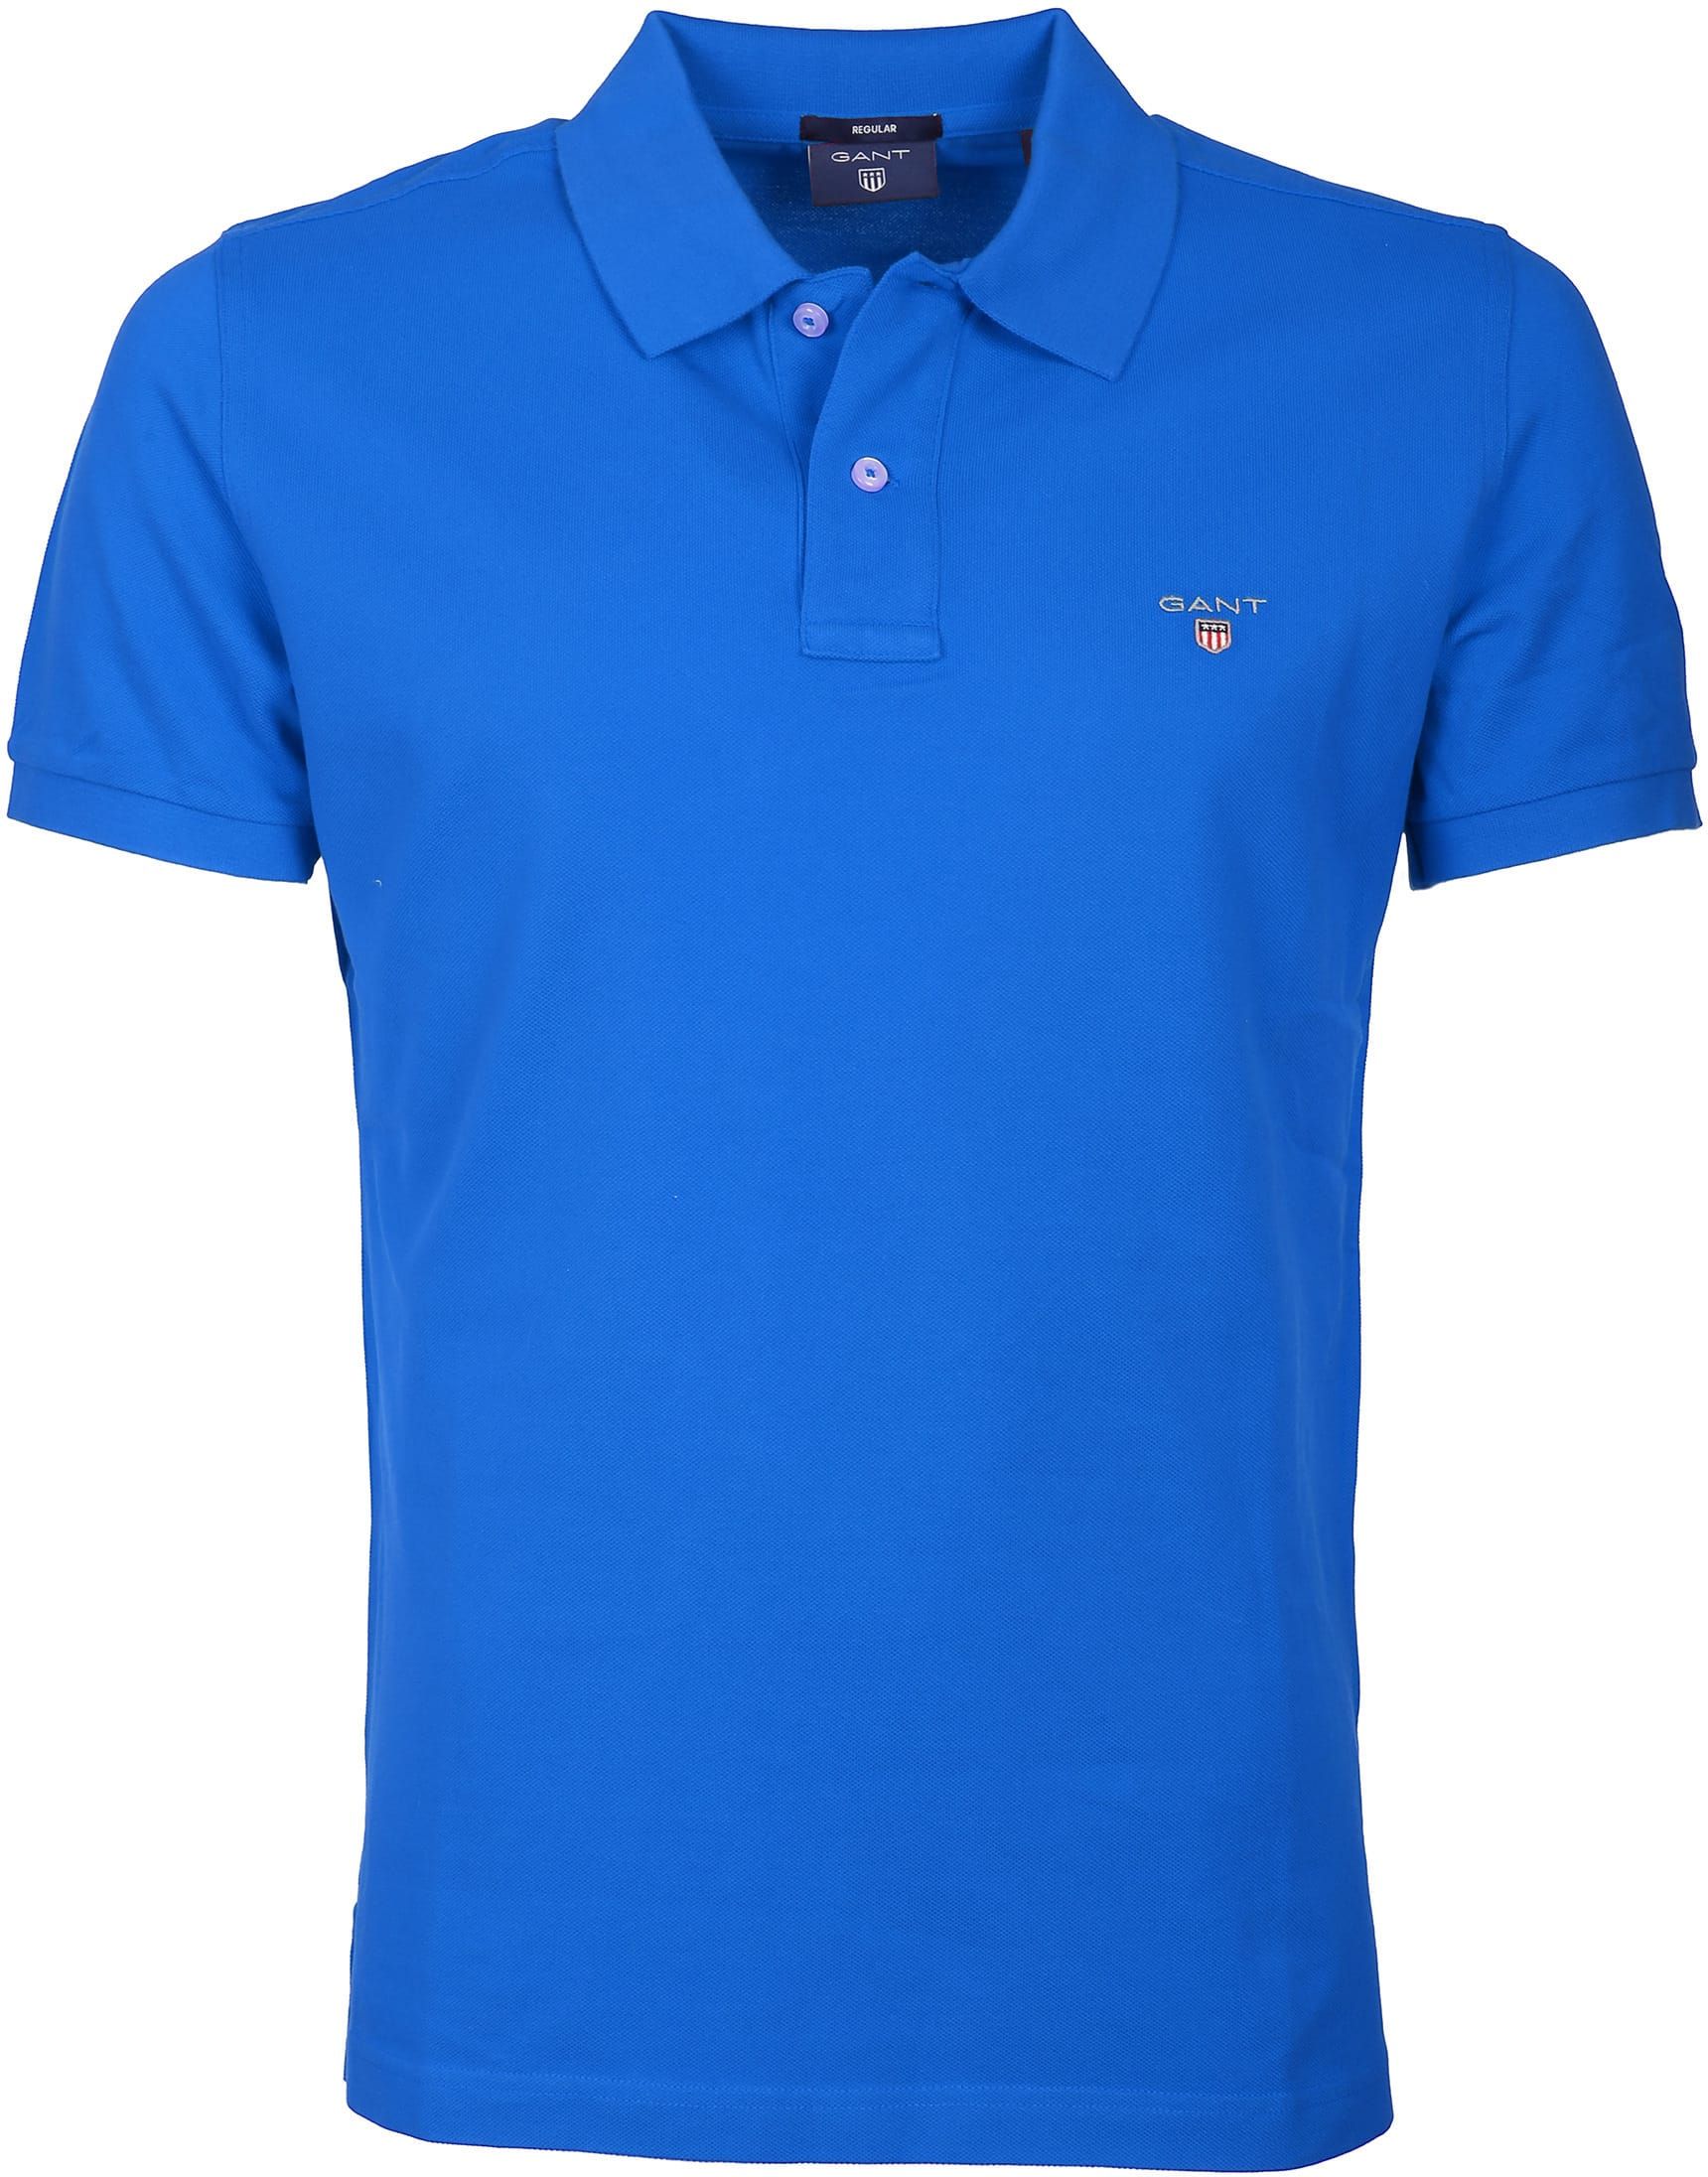 Gant Polo Shirt Basic Kobalt Blue size 3XL